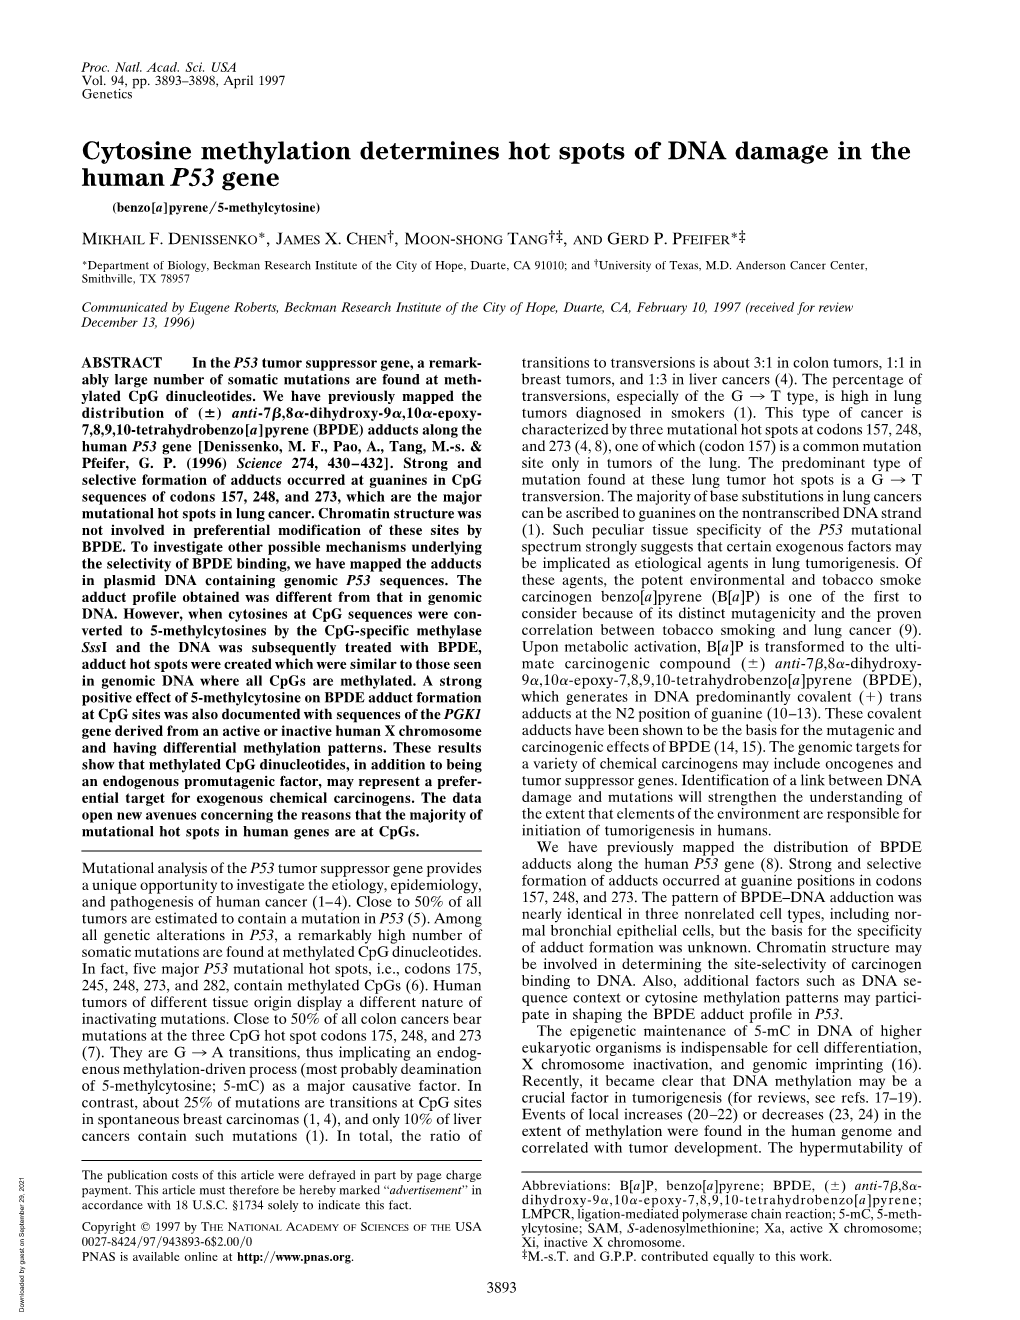 Cytosine Methylation Determines Hot Spots of DNA Damage in the Human P53 Gene (Benzo[A]Pyrene͞5-Methylcytosine)